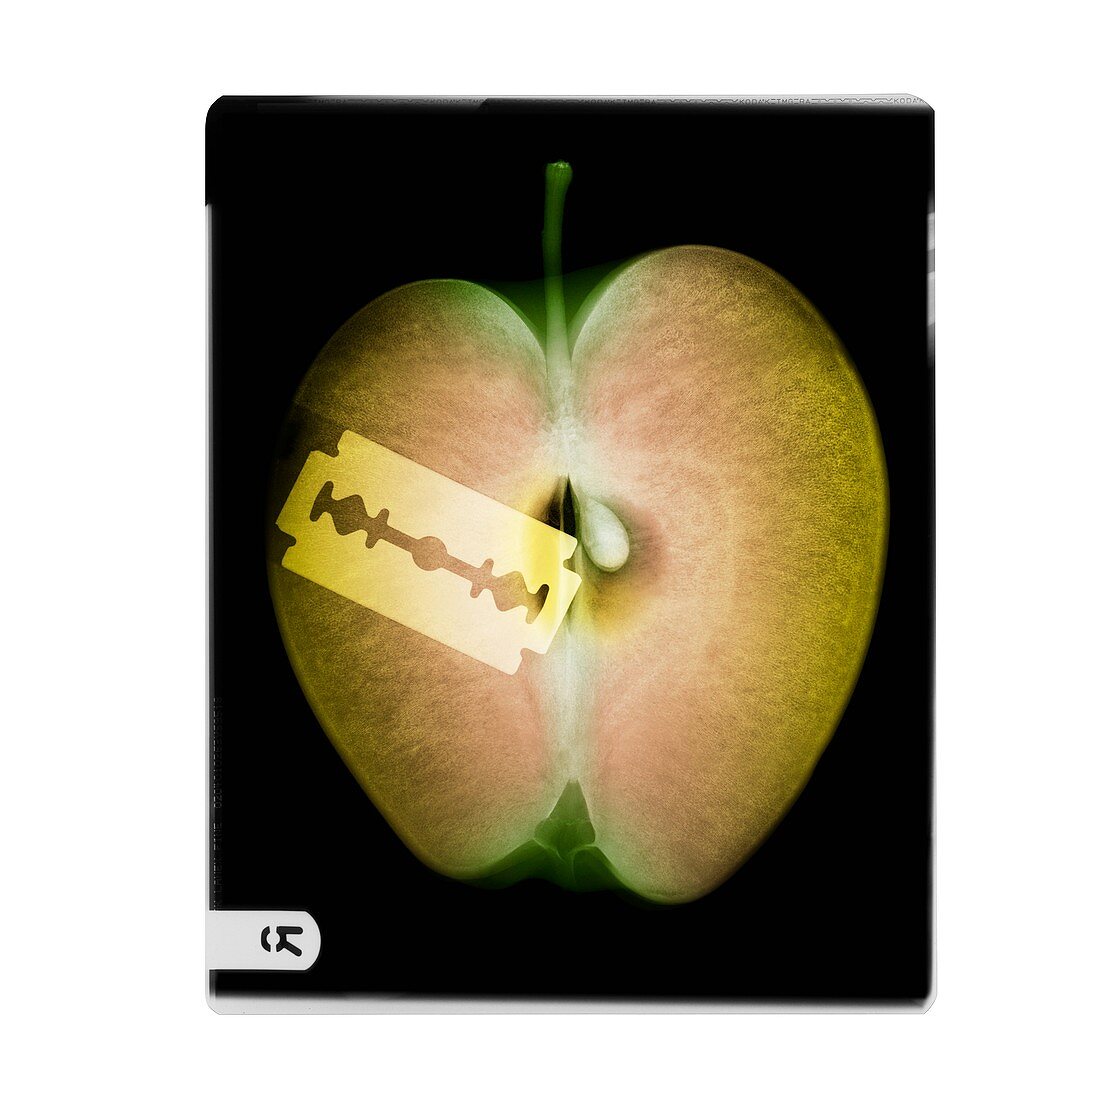 Apple and razor blade,coloured X-ray